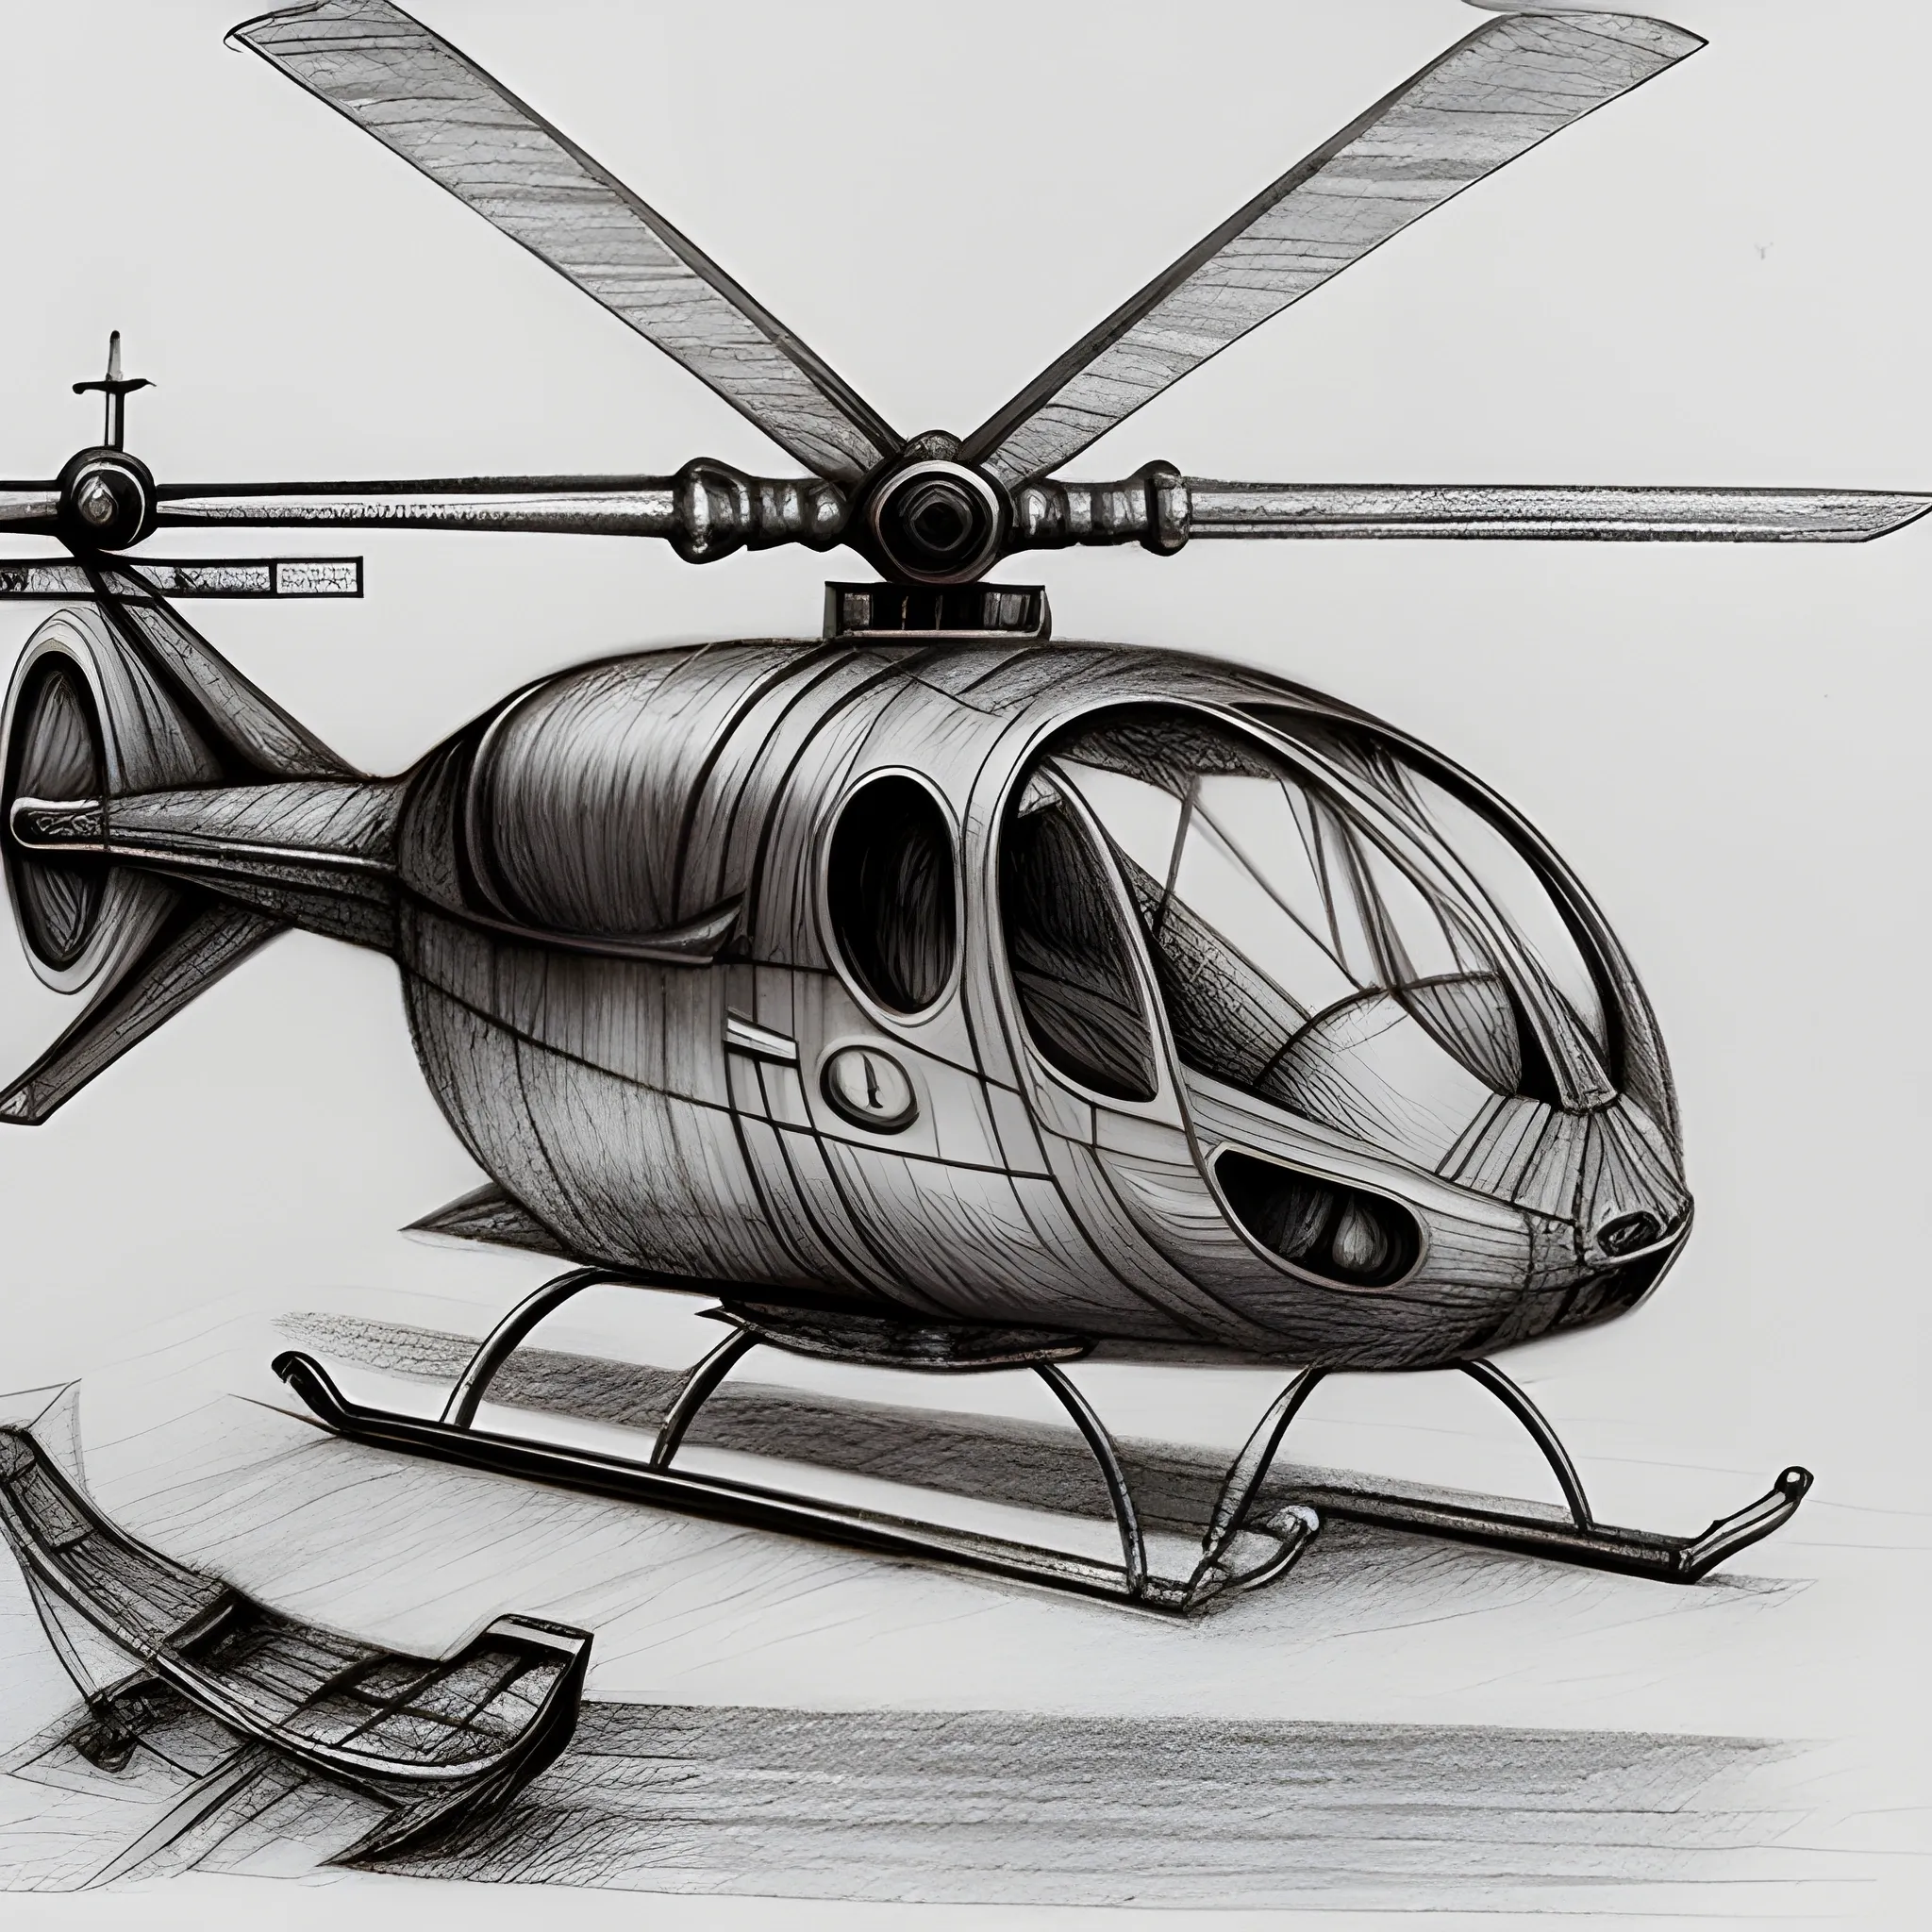 Leonardo da Vinci's helicopter design, Pencil Sketch